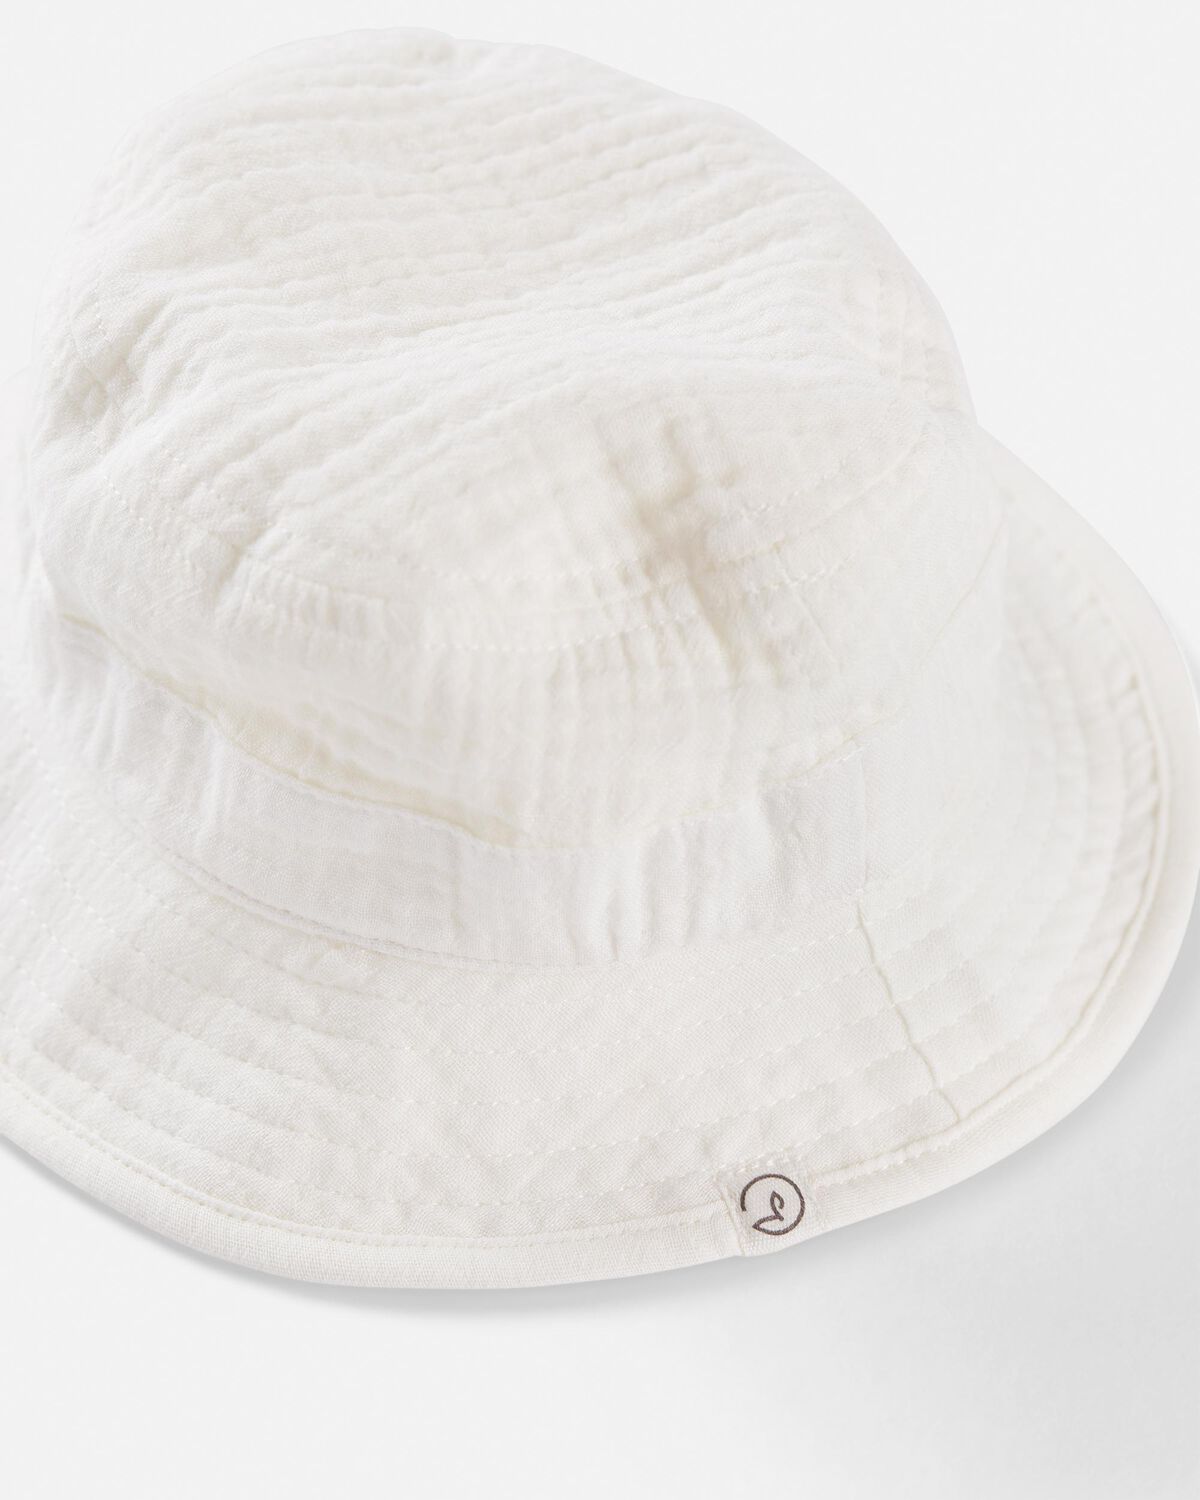 Light Cream Toddler Organic Cotton Gauze Hat | carters.com | Carter's